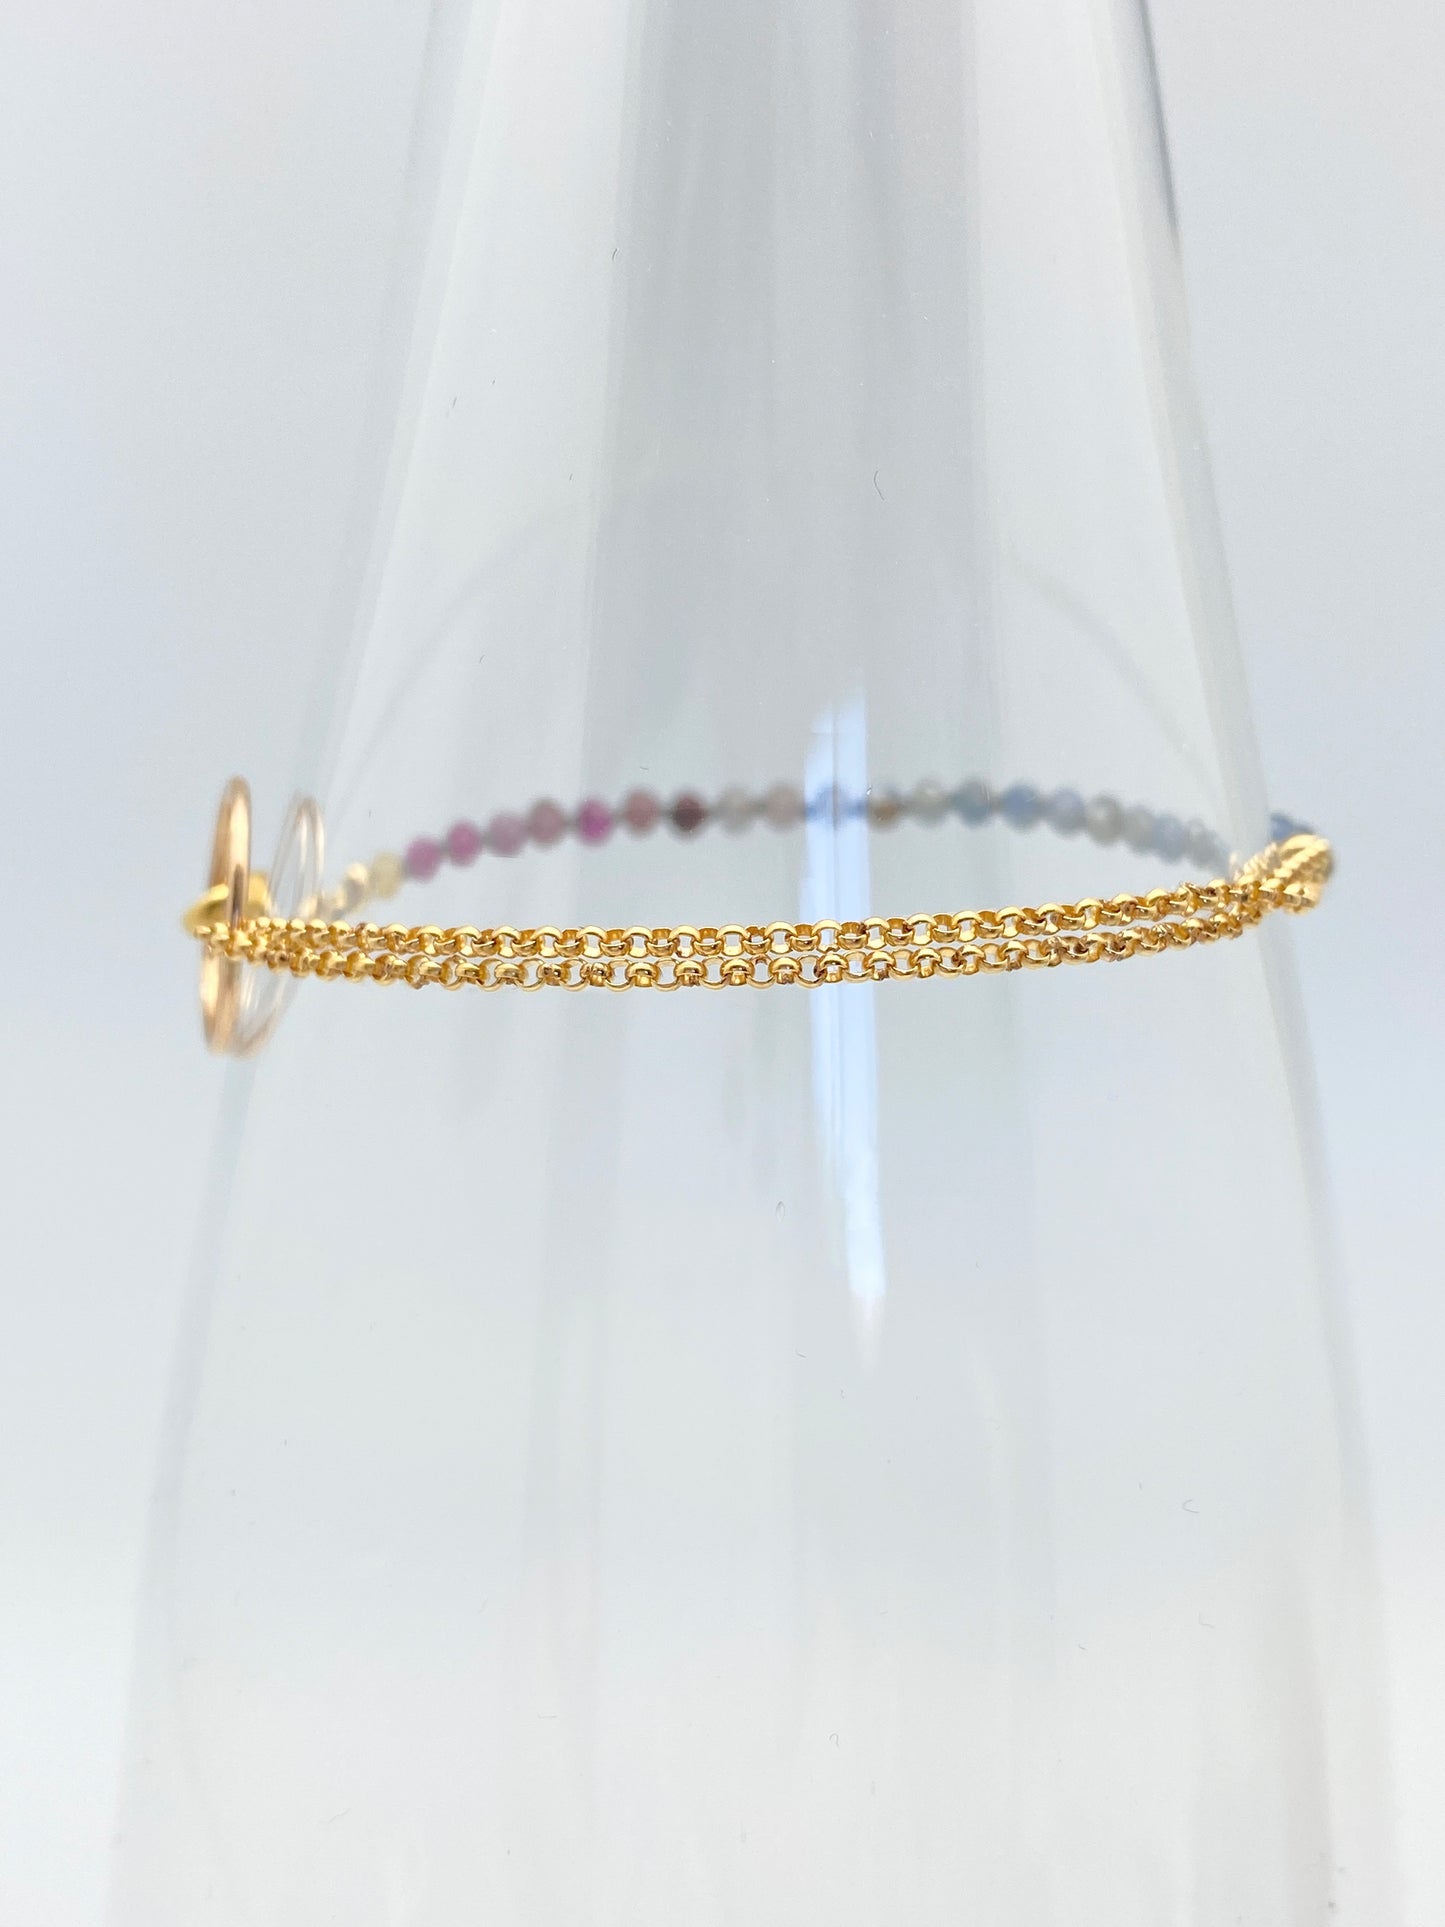 Yin Yang Ruby and Sapphire bracelet